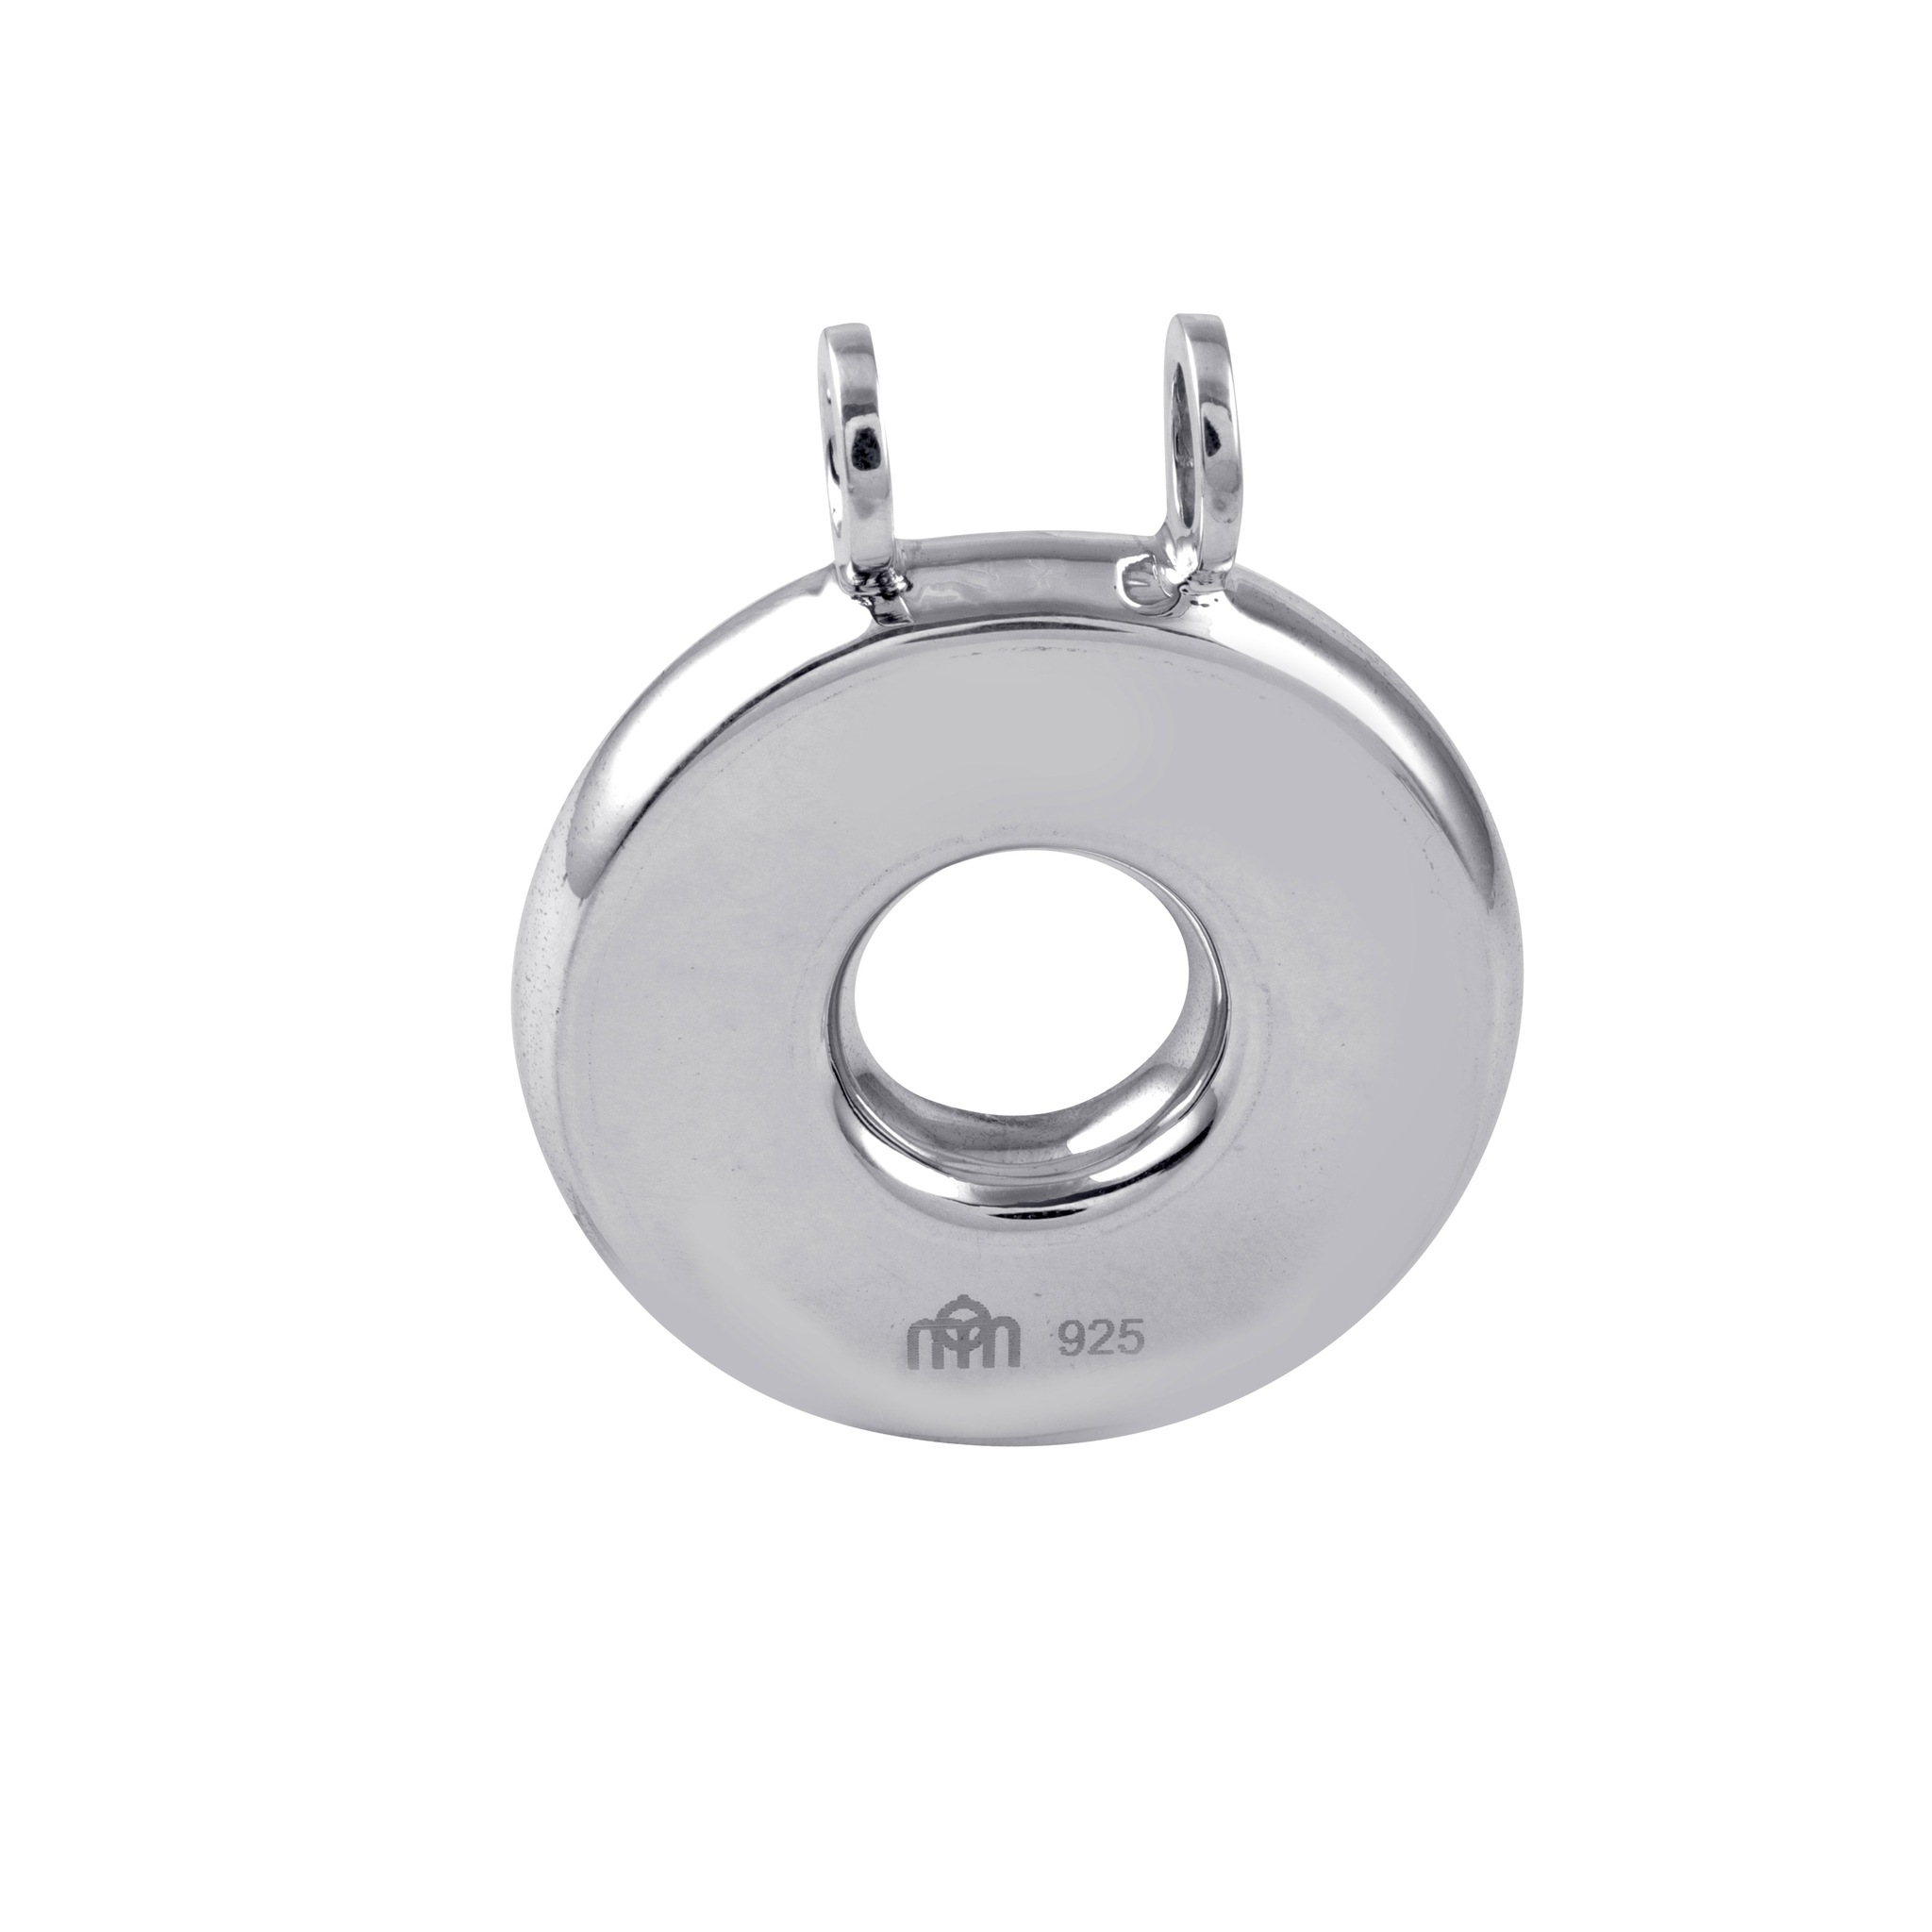 Silverhänge med runda former. Silver pendant with round a round shape.